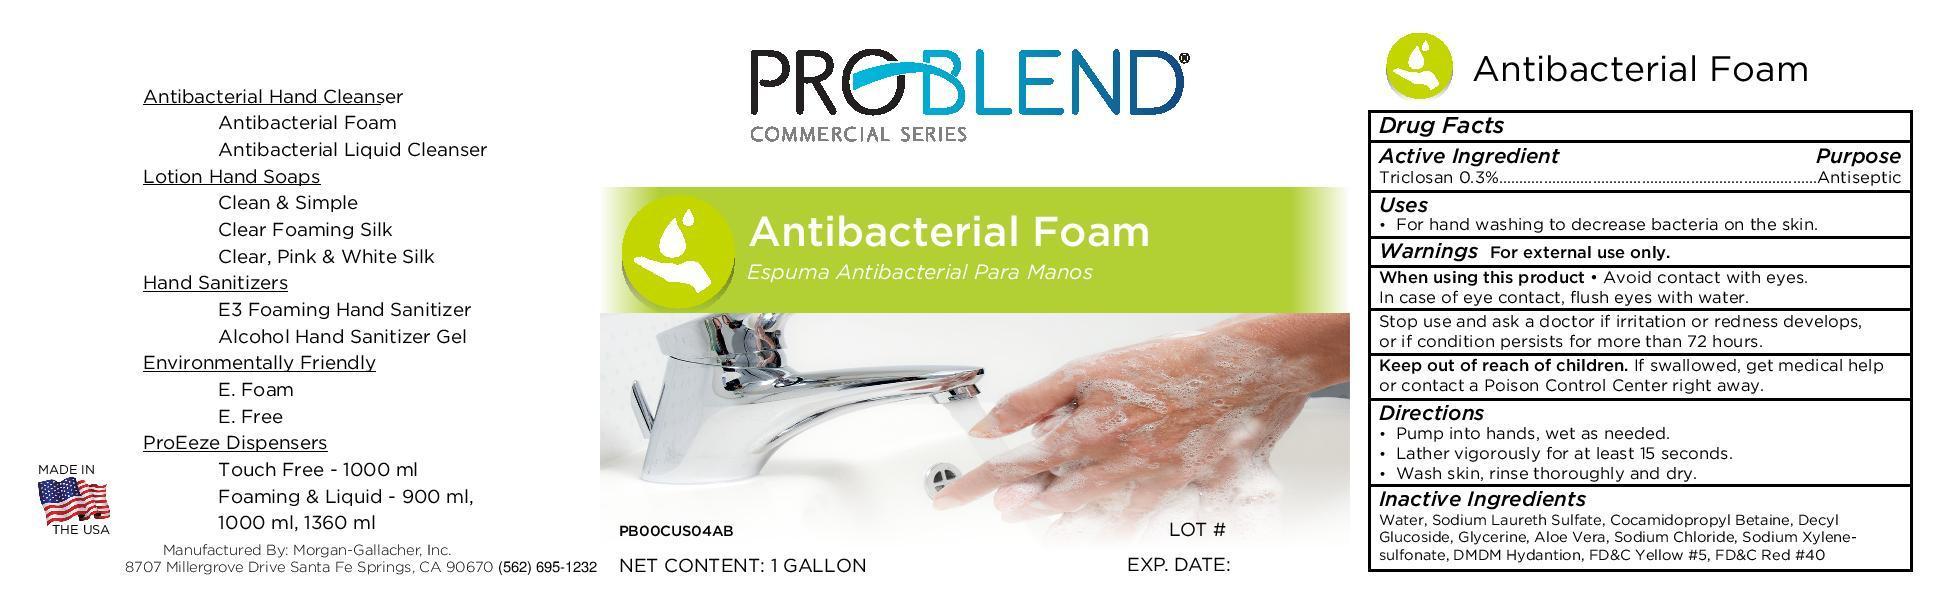 Problend Antibacterial Foam